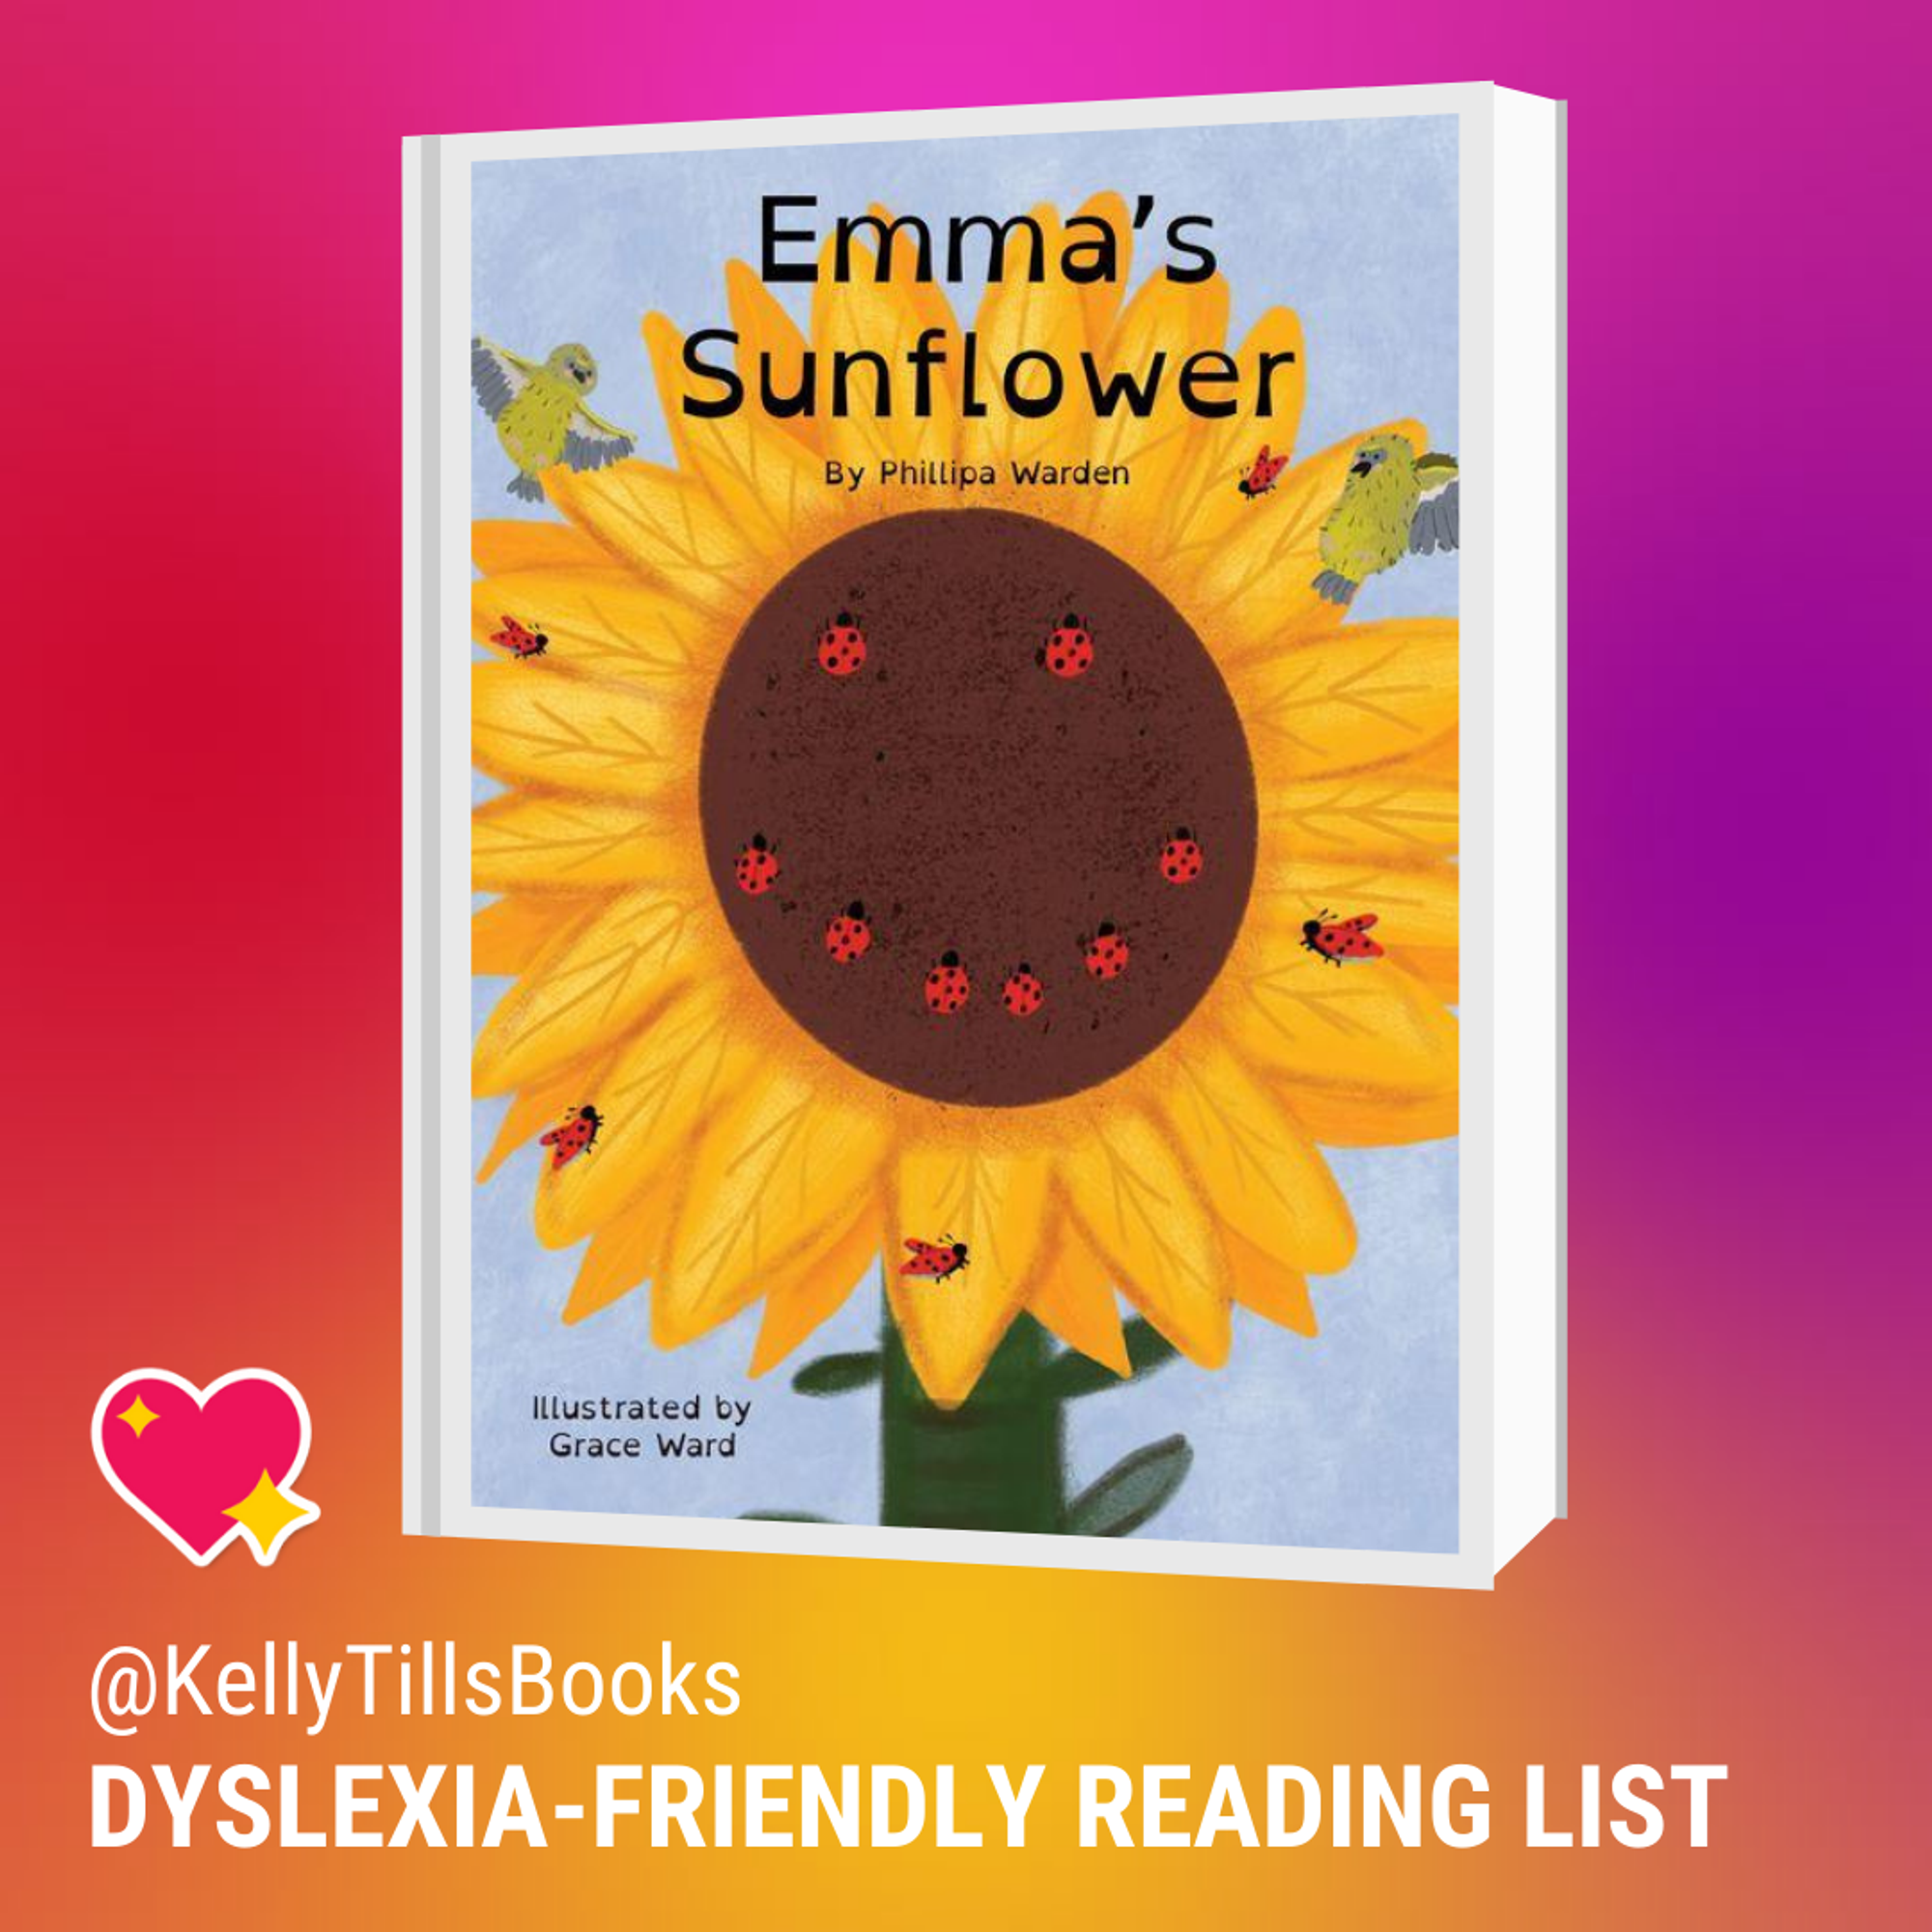 Emma’s Sunflower